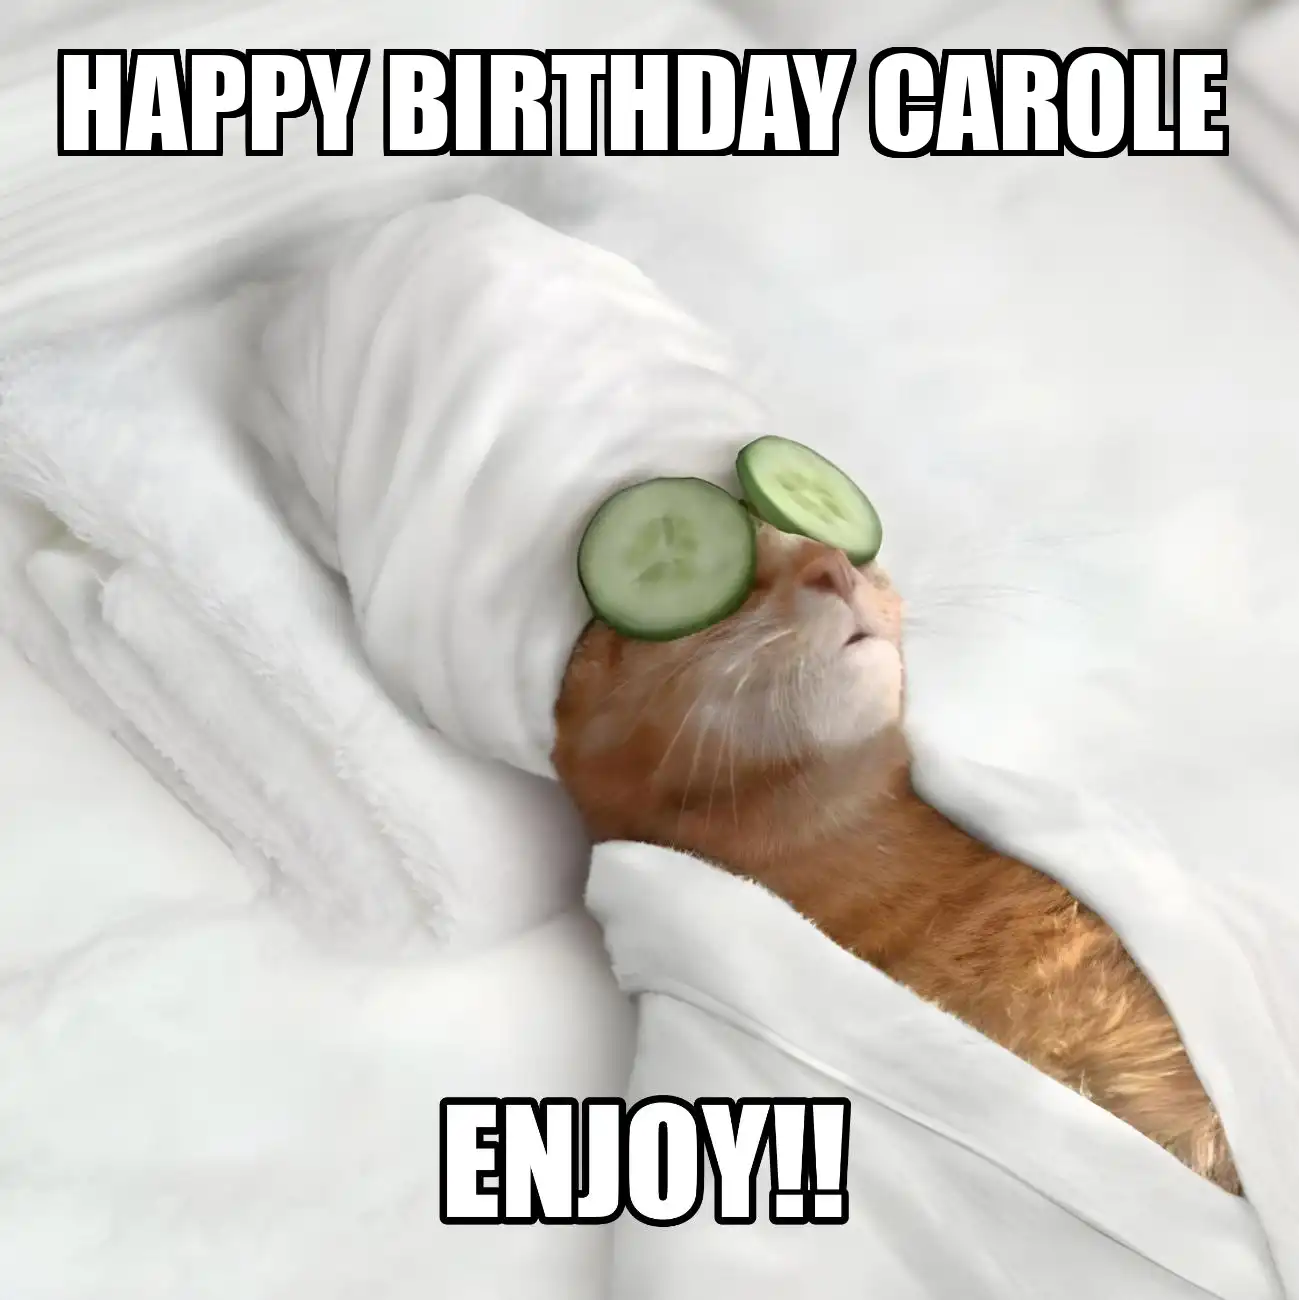 Happy Birthday Carole Enjoy Cat Meme